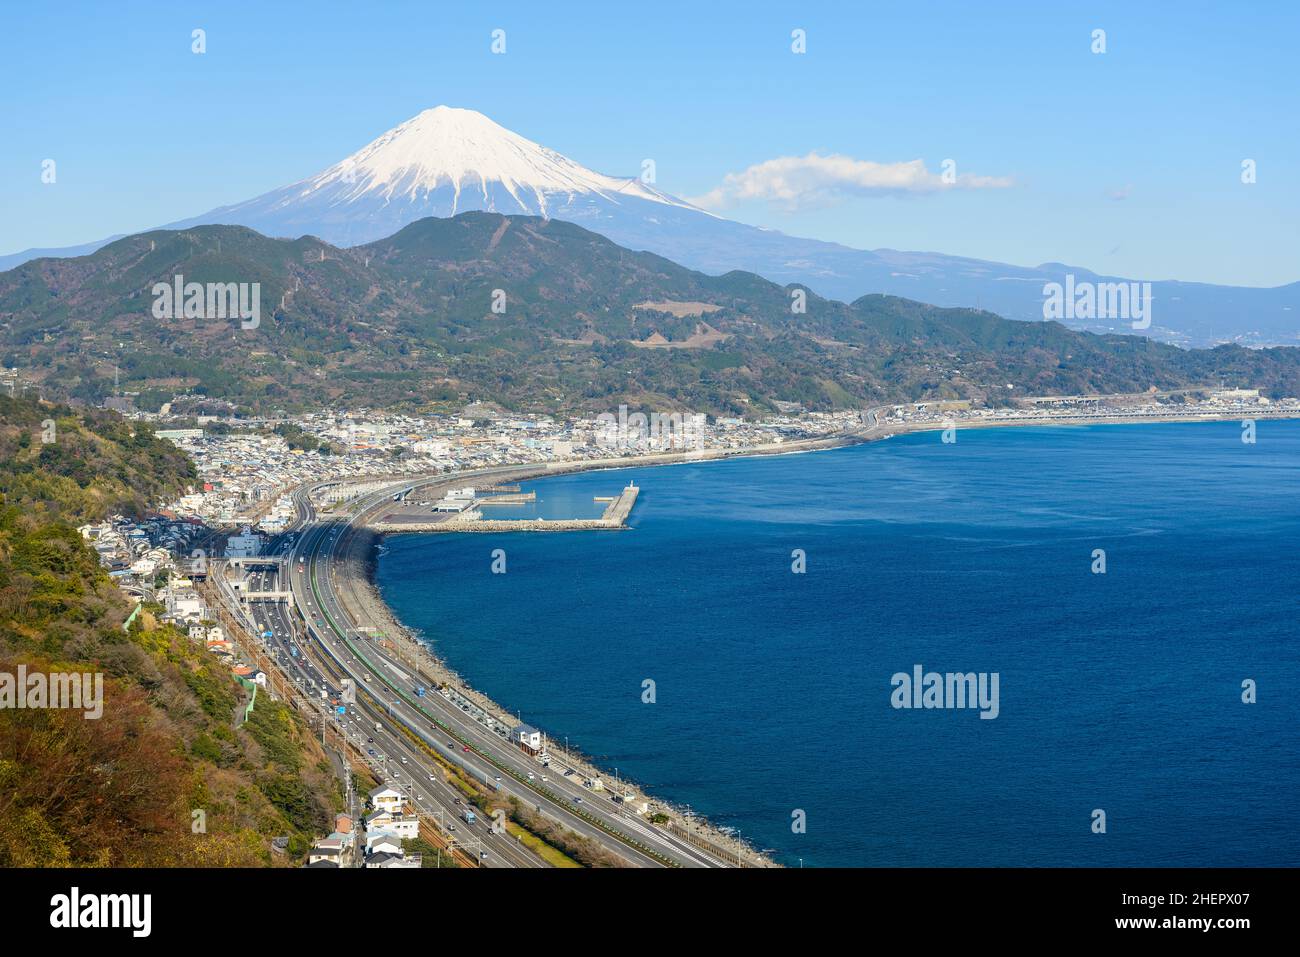 Mount Fuji And The Coastline From Satta Pass, Shizuoka Prefecture Stock Photo